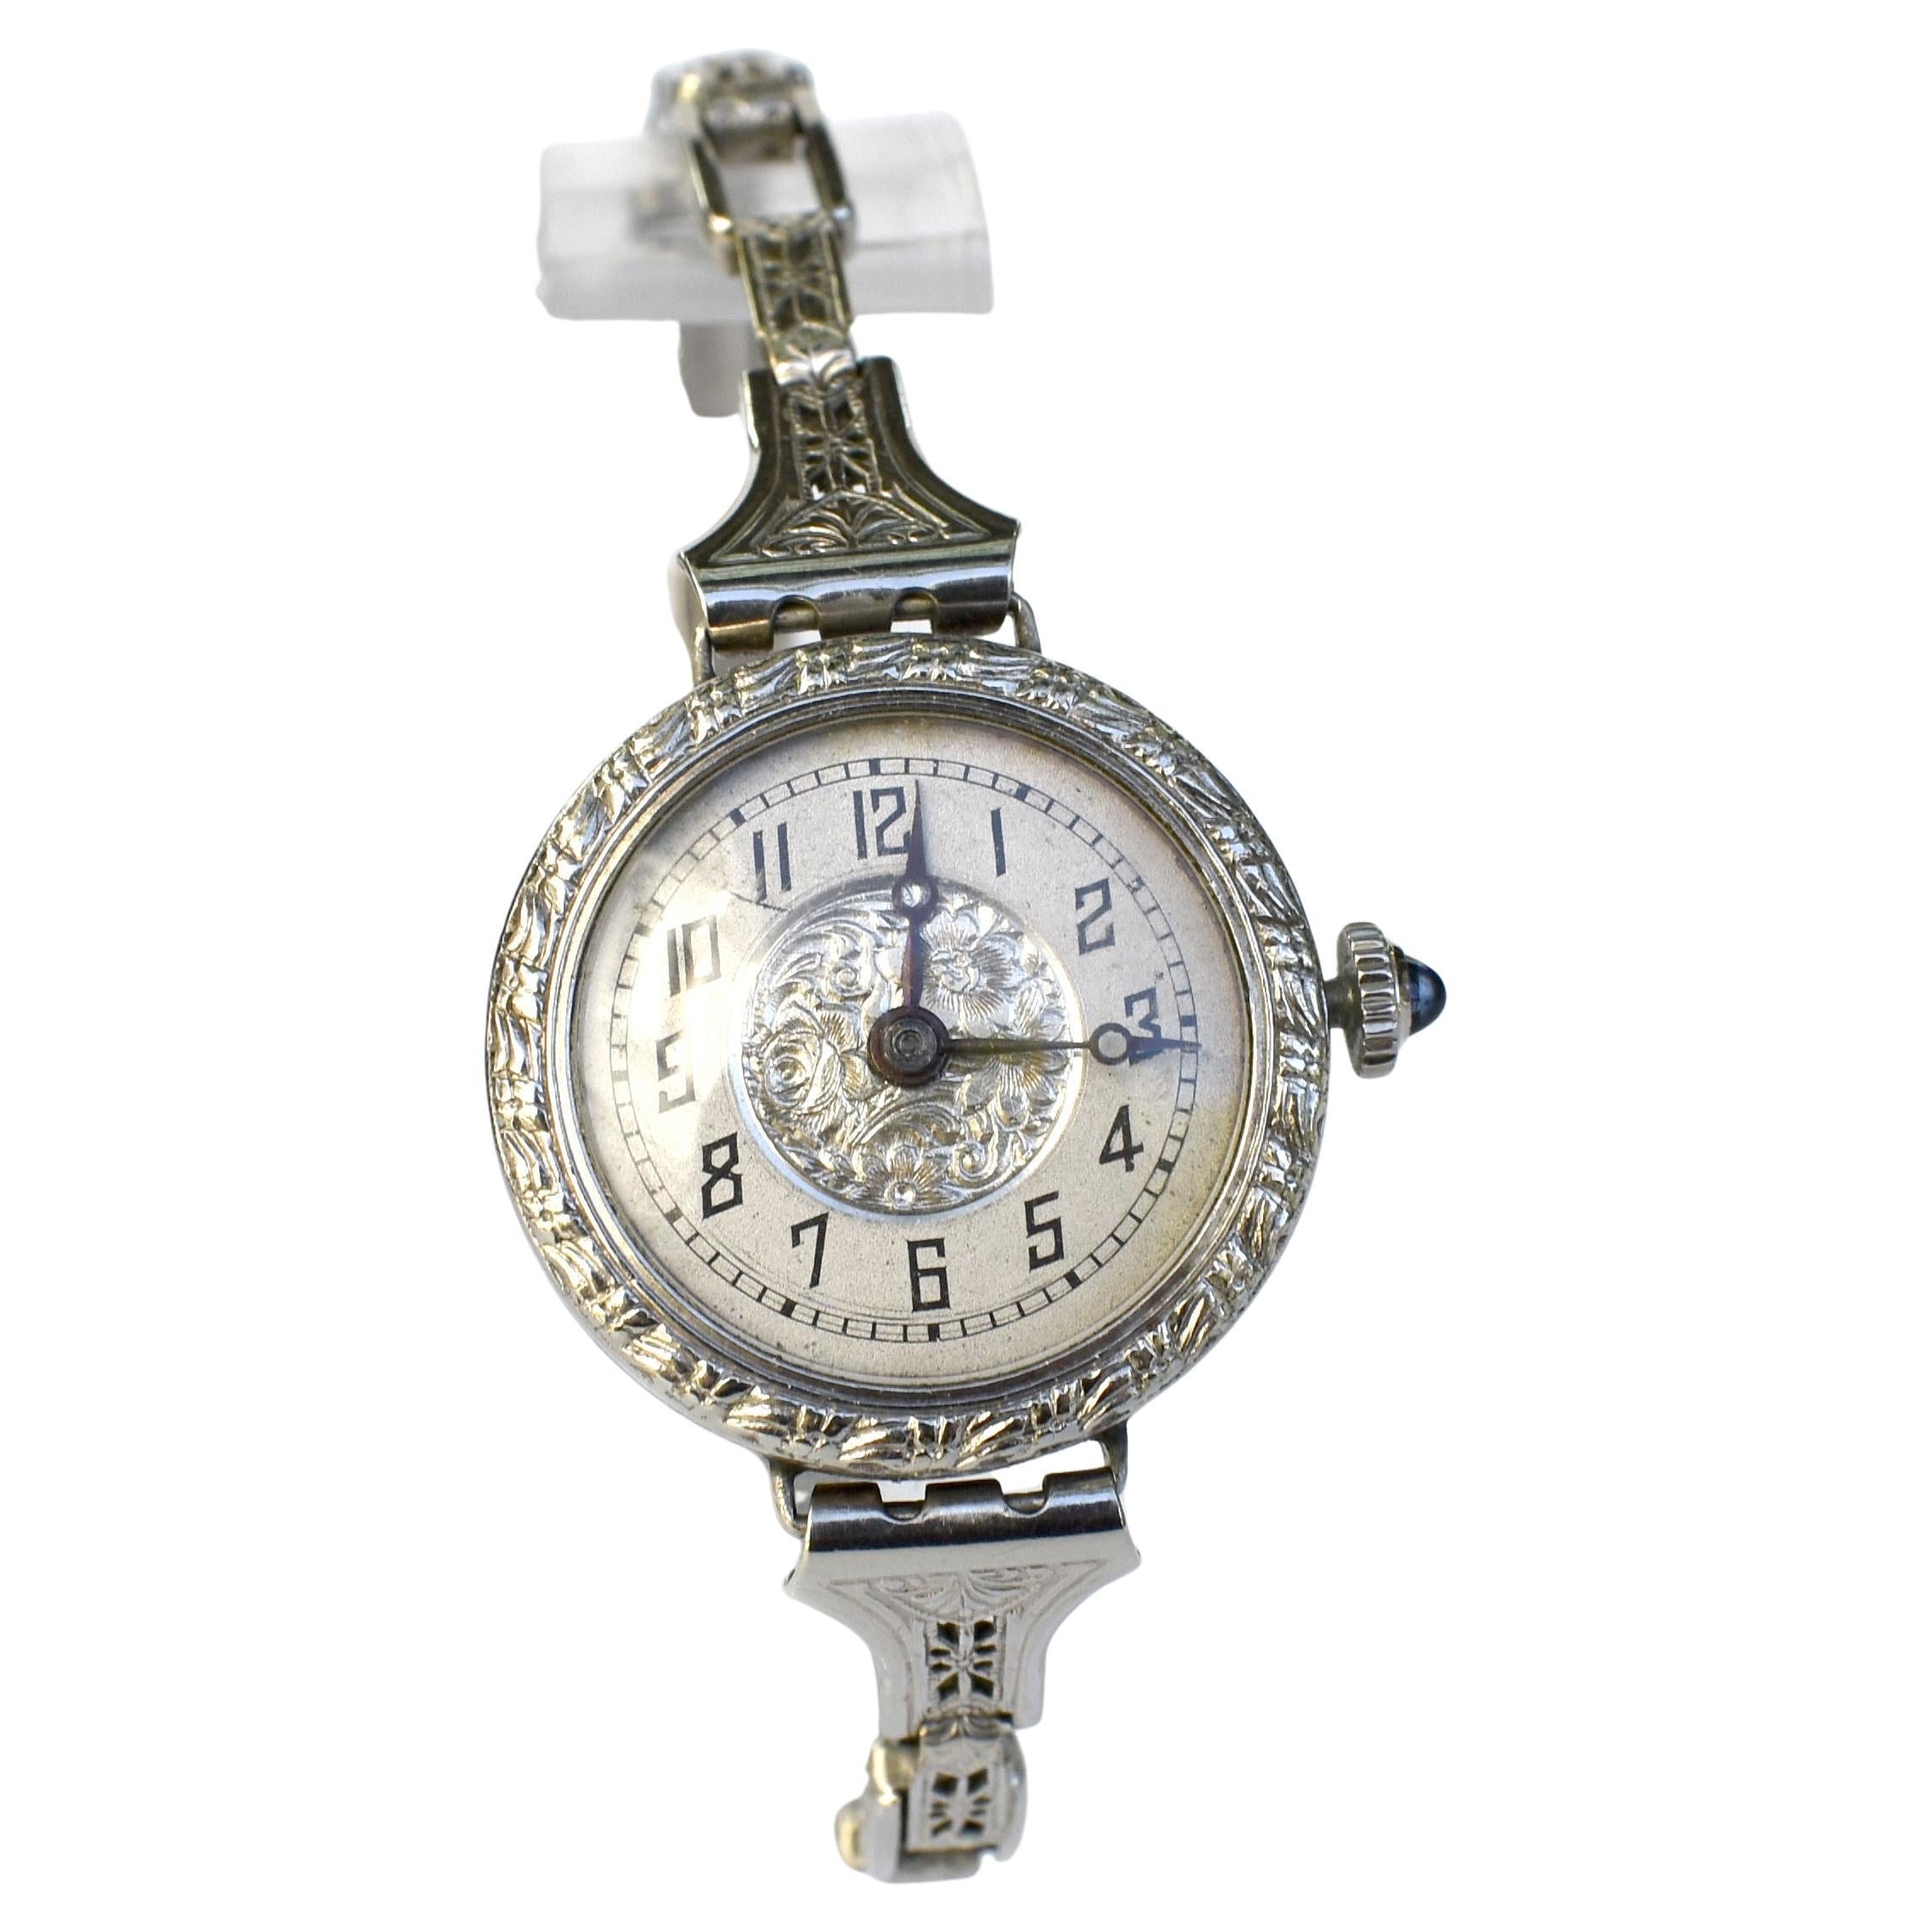 Art Deco Ladies Manual Watch by Swiss Watchmakers Erima, c1930